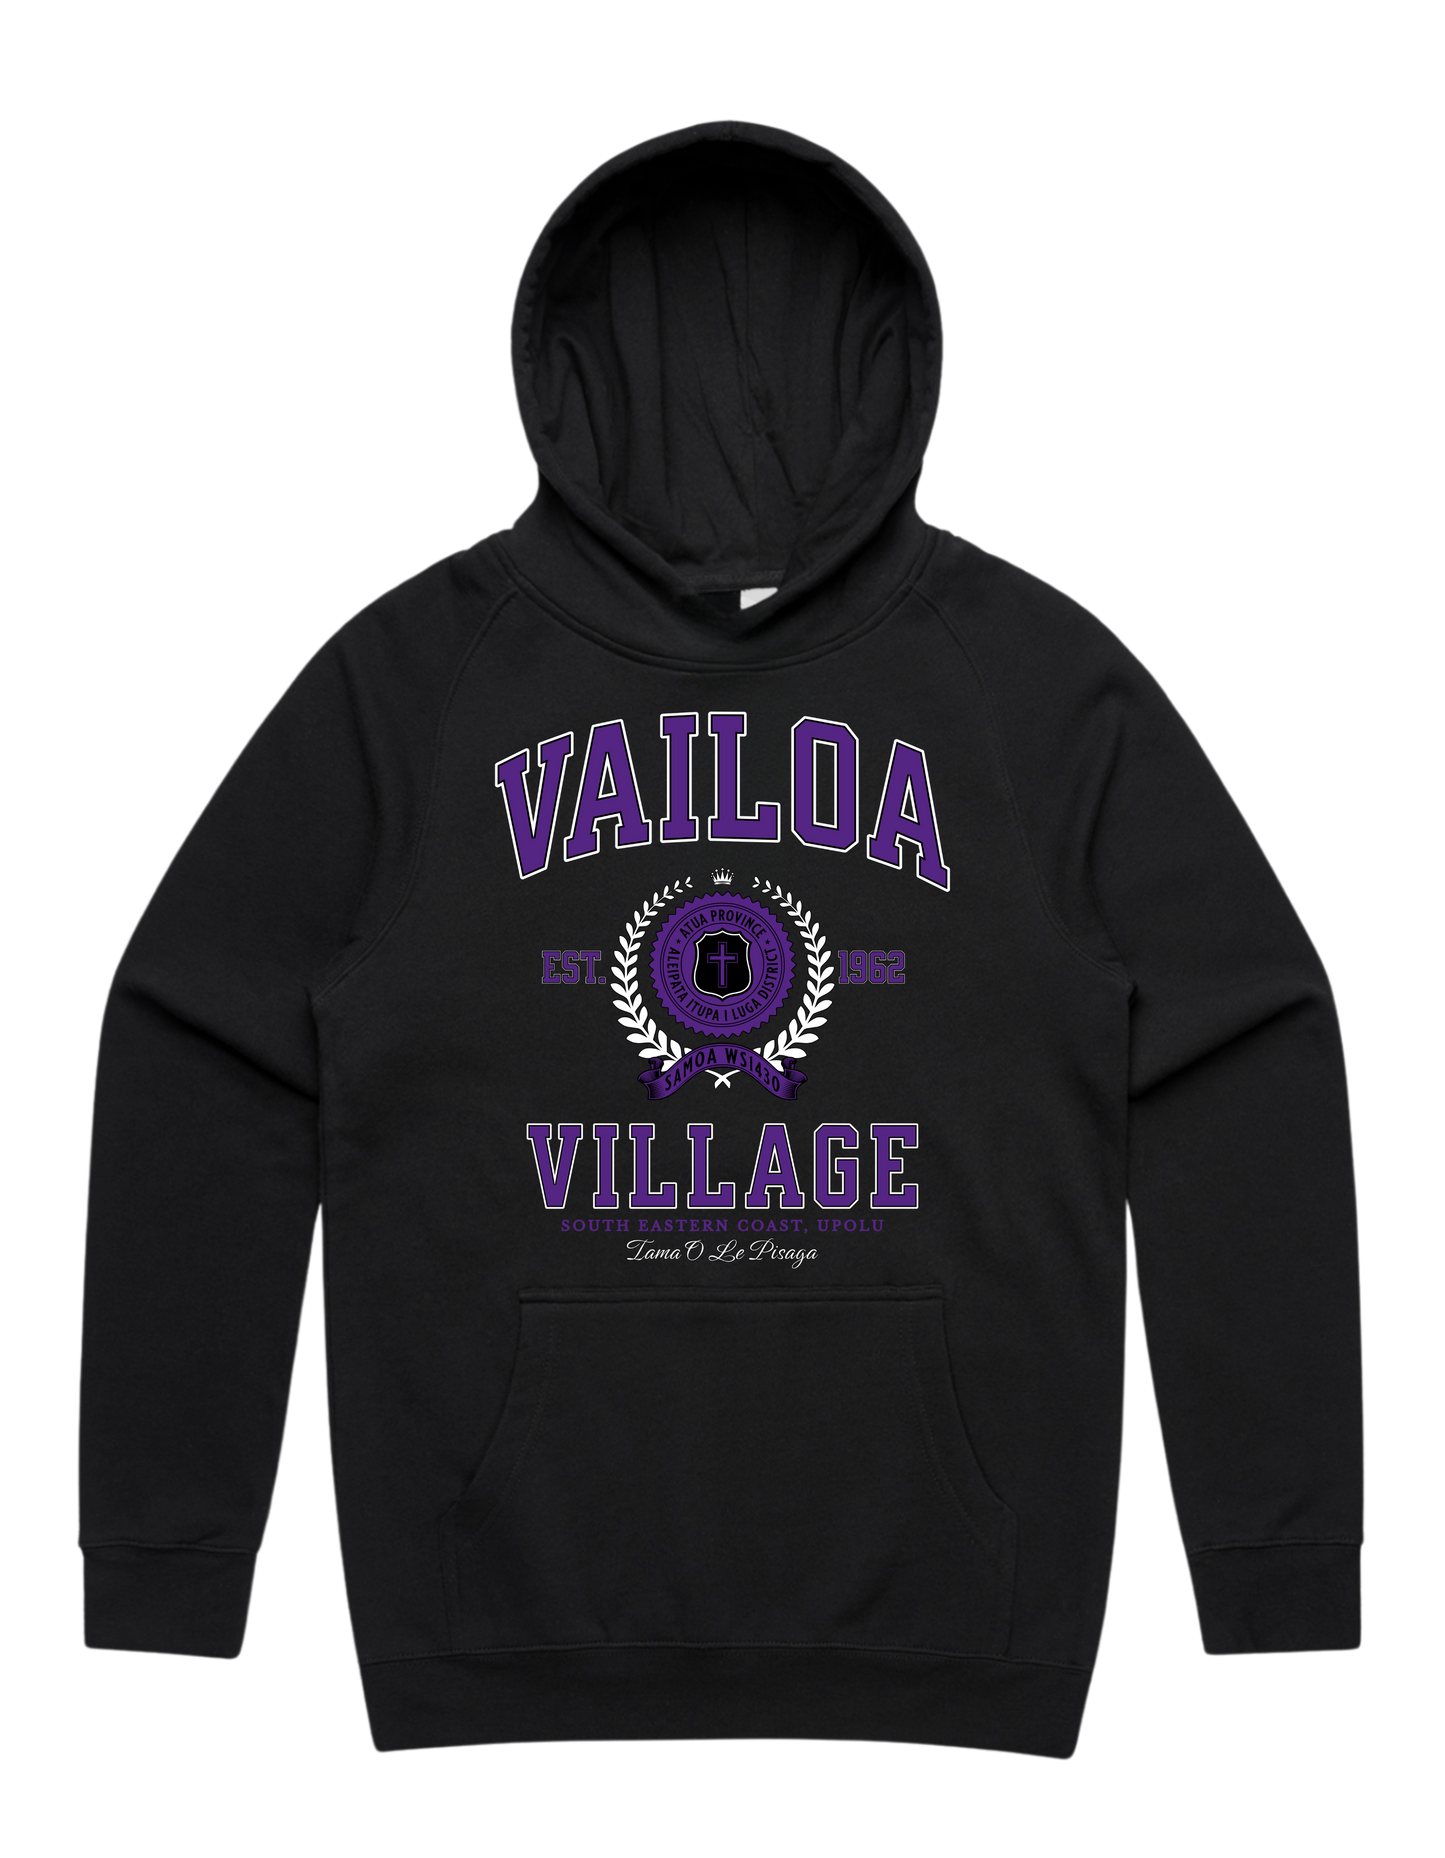 Vailoa Aleipata Varsity Supply Hood 5101 - AS Colour